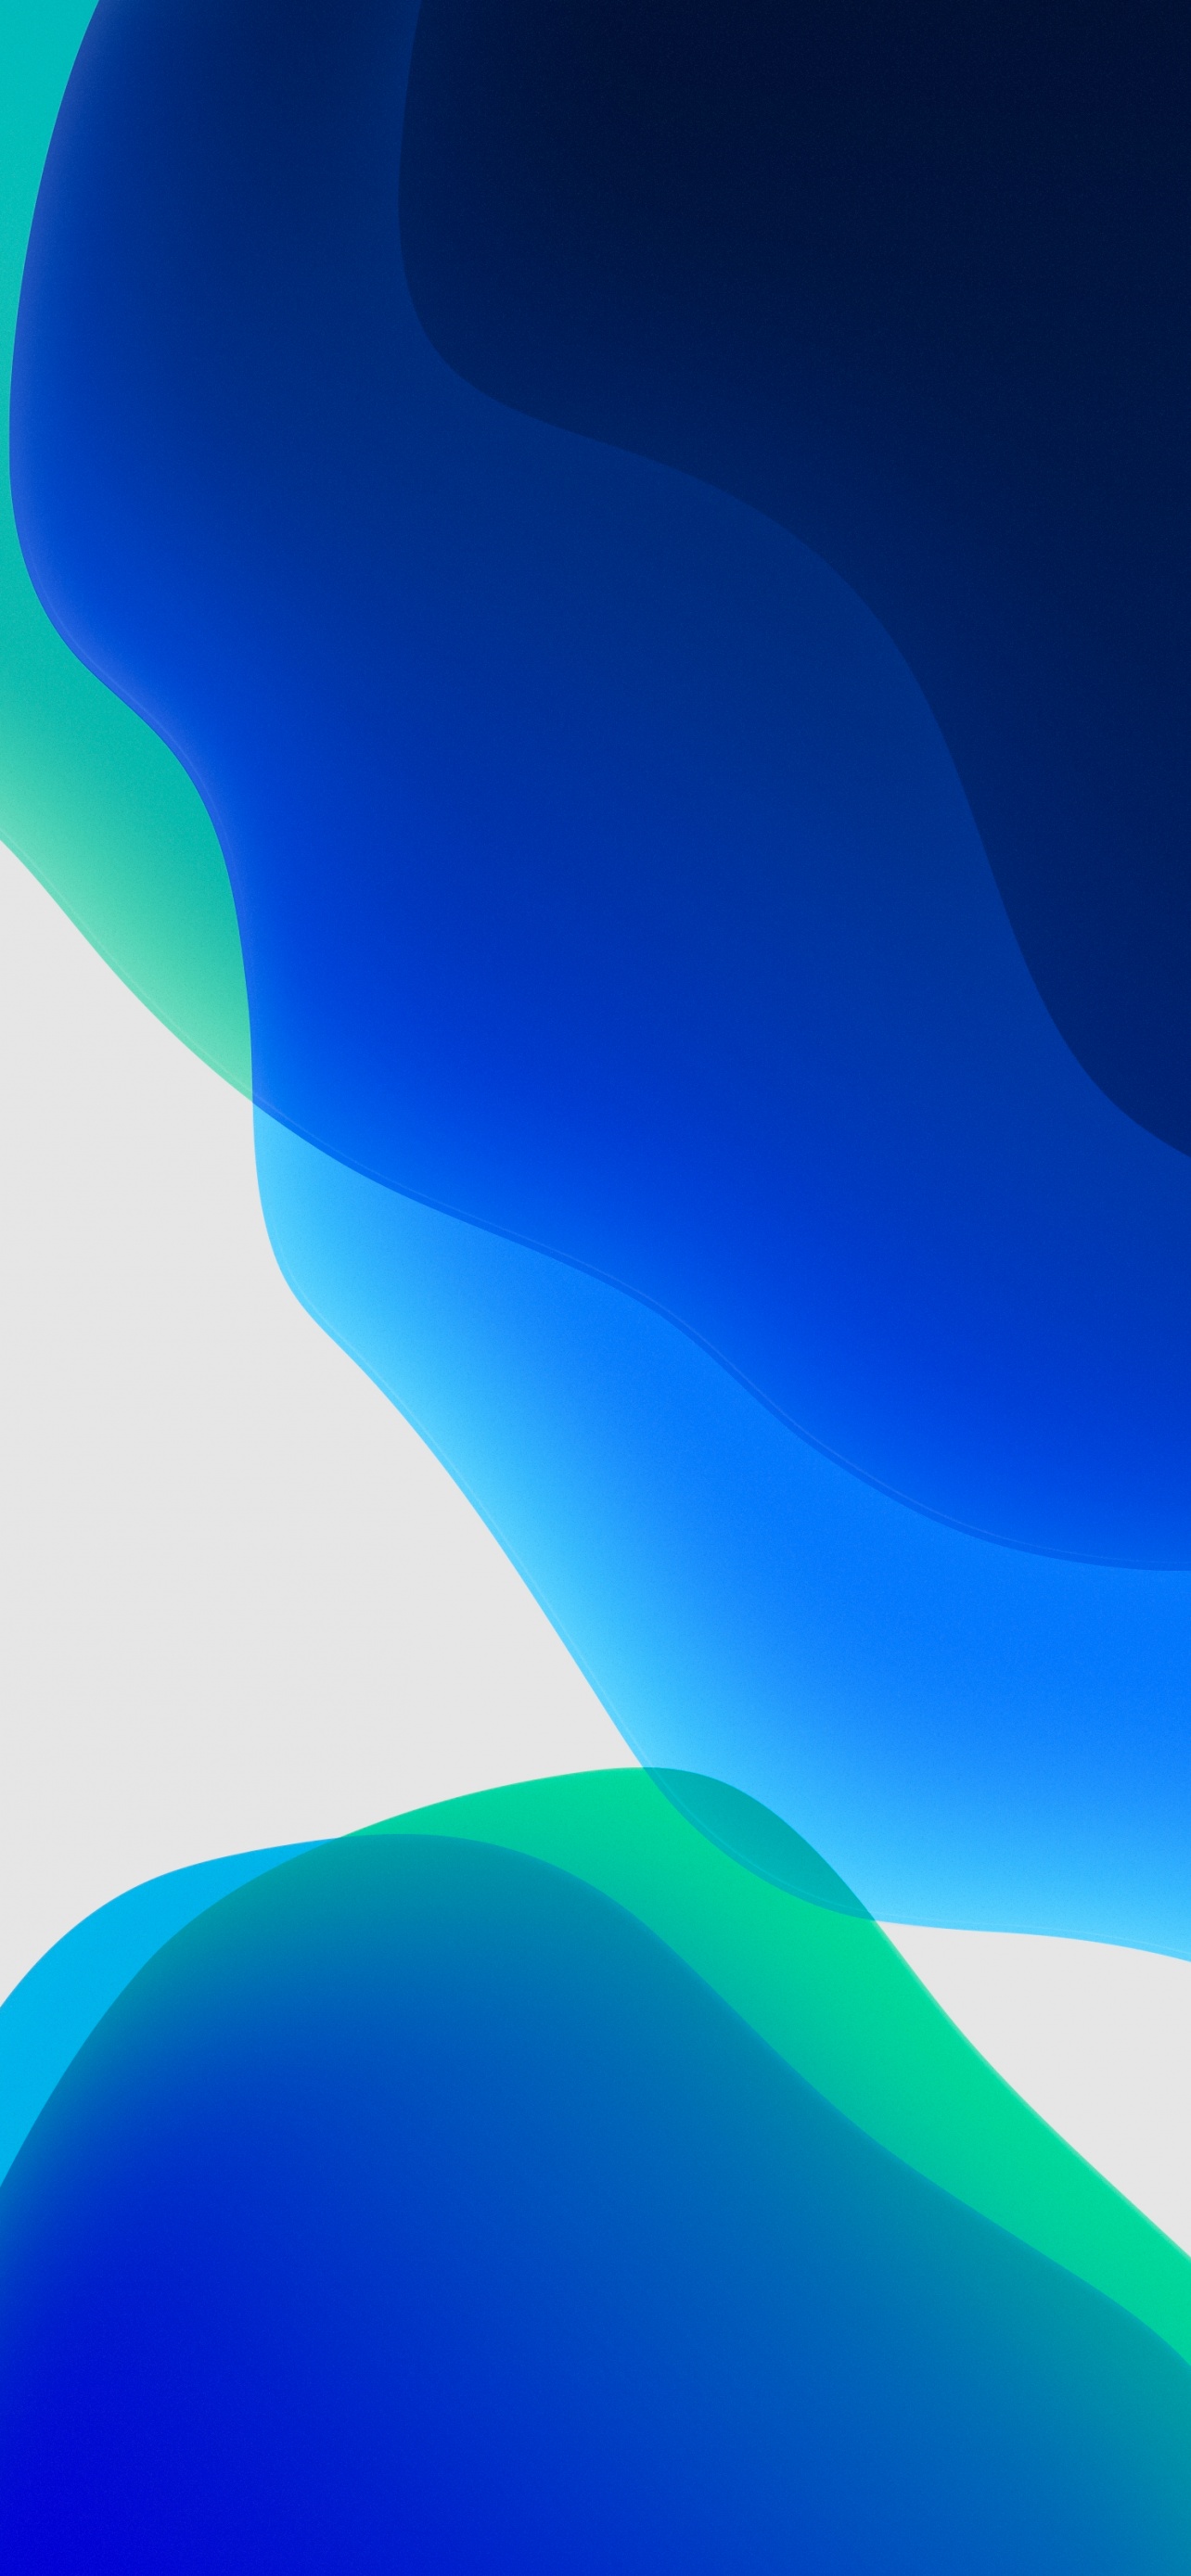 iPadOS Wallpaper 4K, Stock, Blue, Abstract